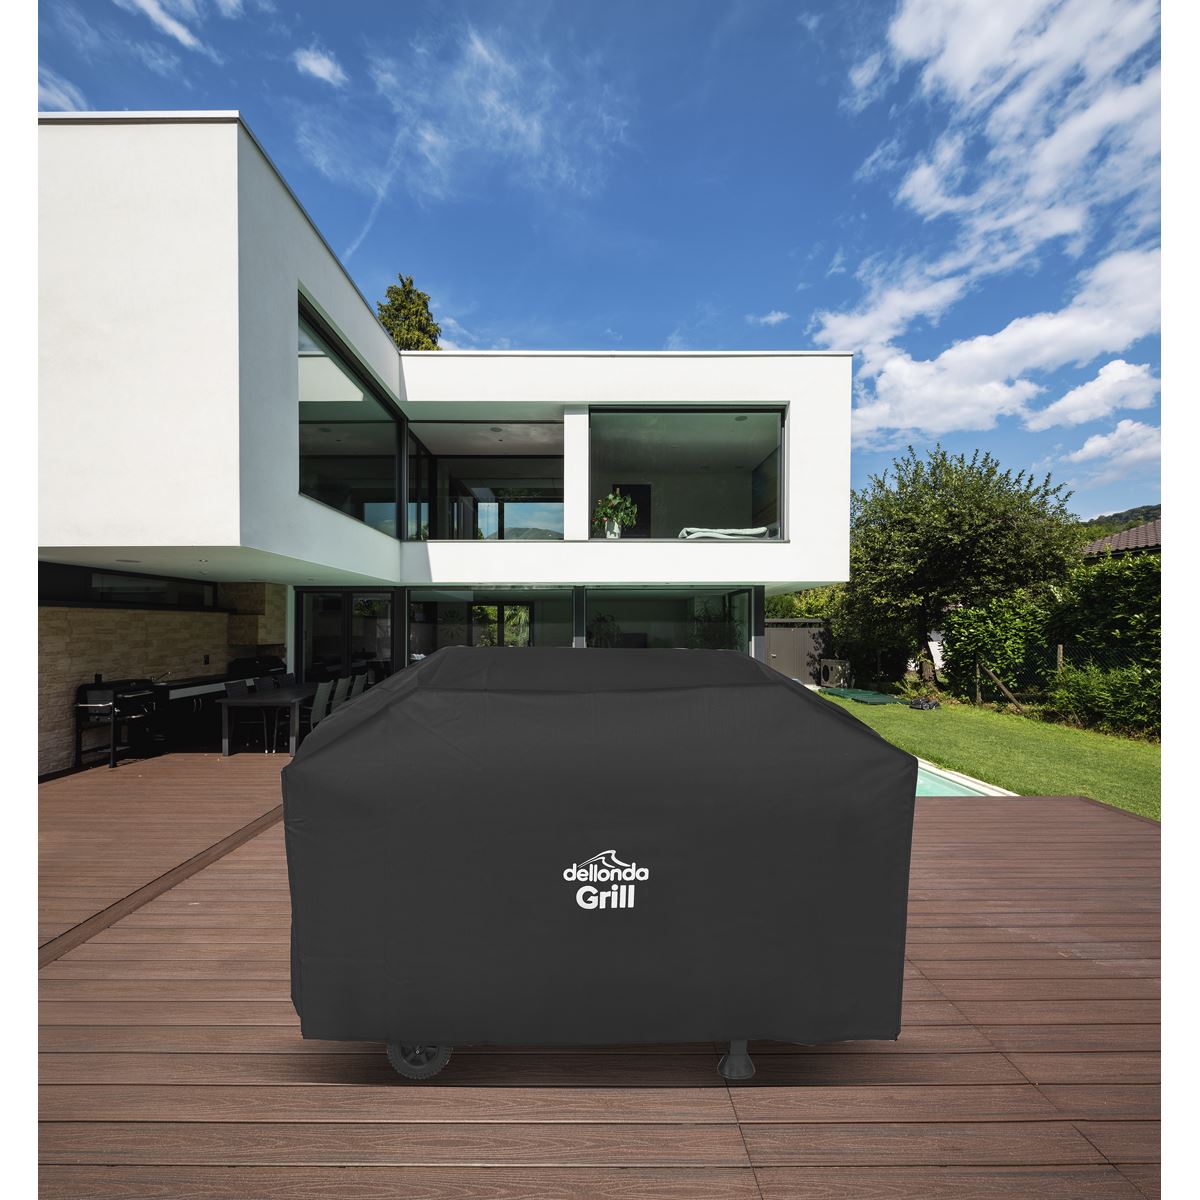 Dellonda Black PVC Cover for BBQs, Water-Resistant 1370 x 920mm